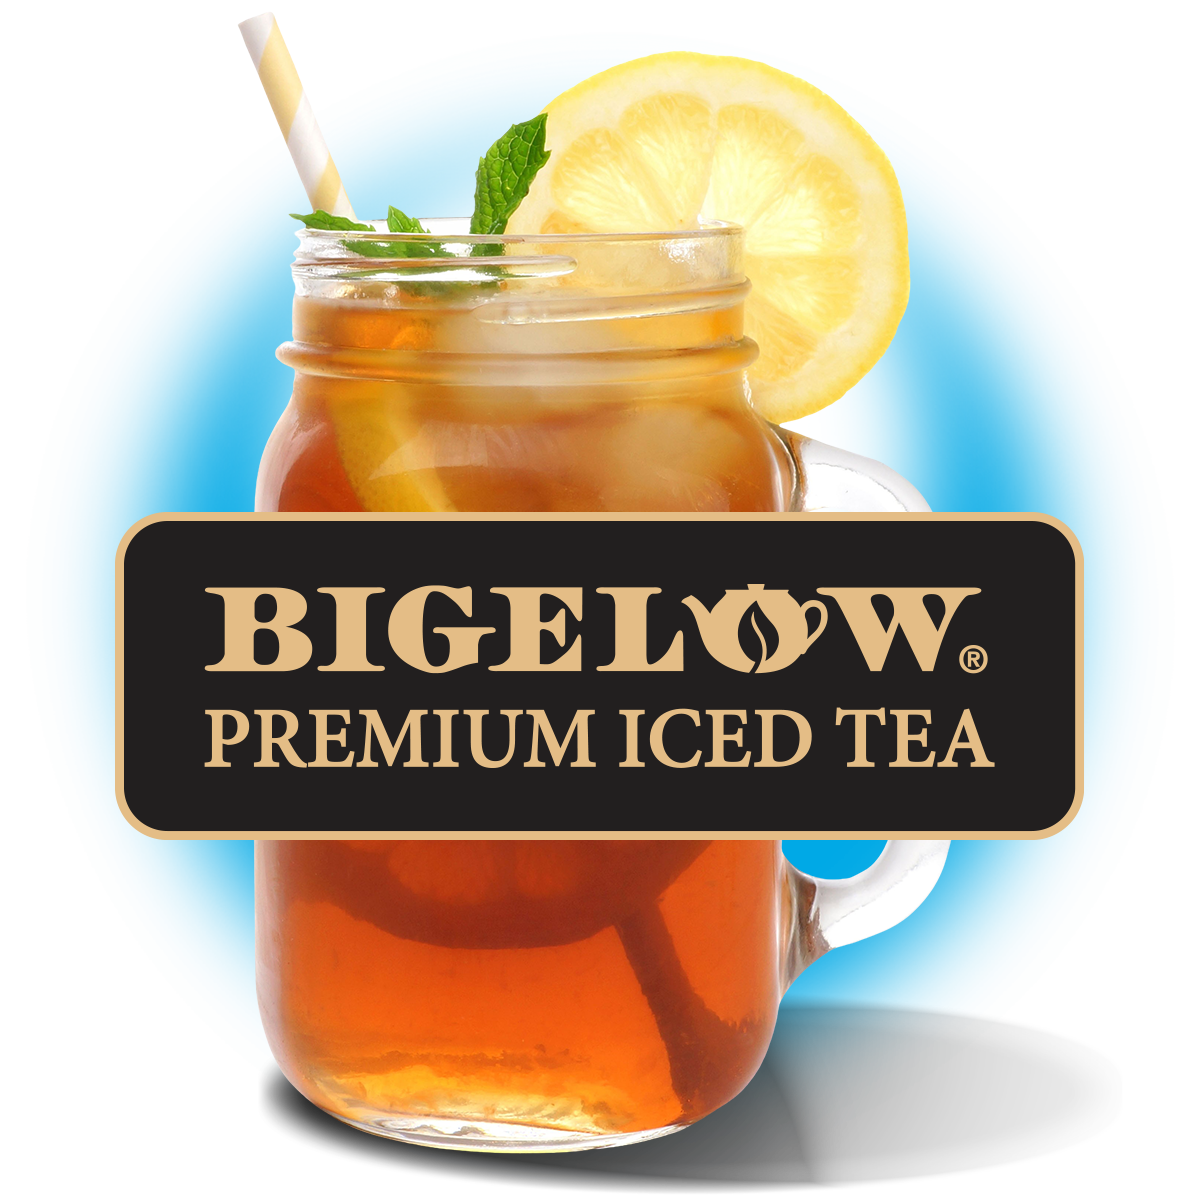 Bigelow Teas: America's #1 Specialty Tea!